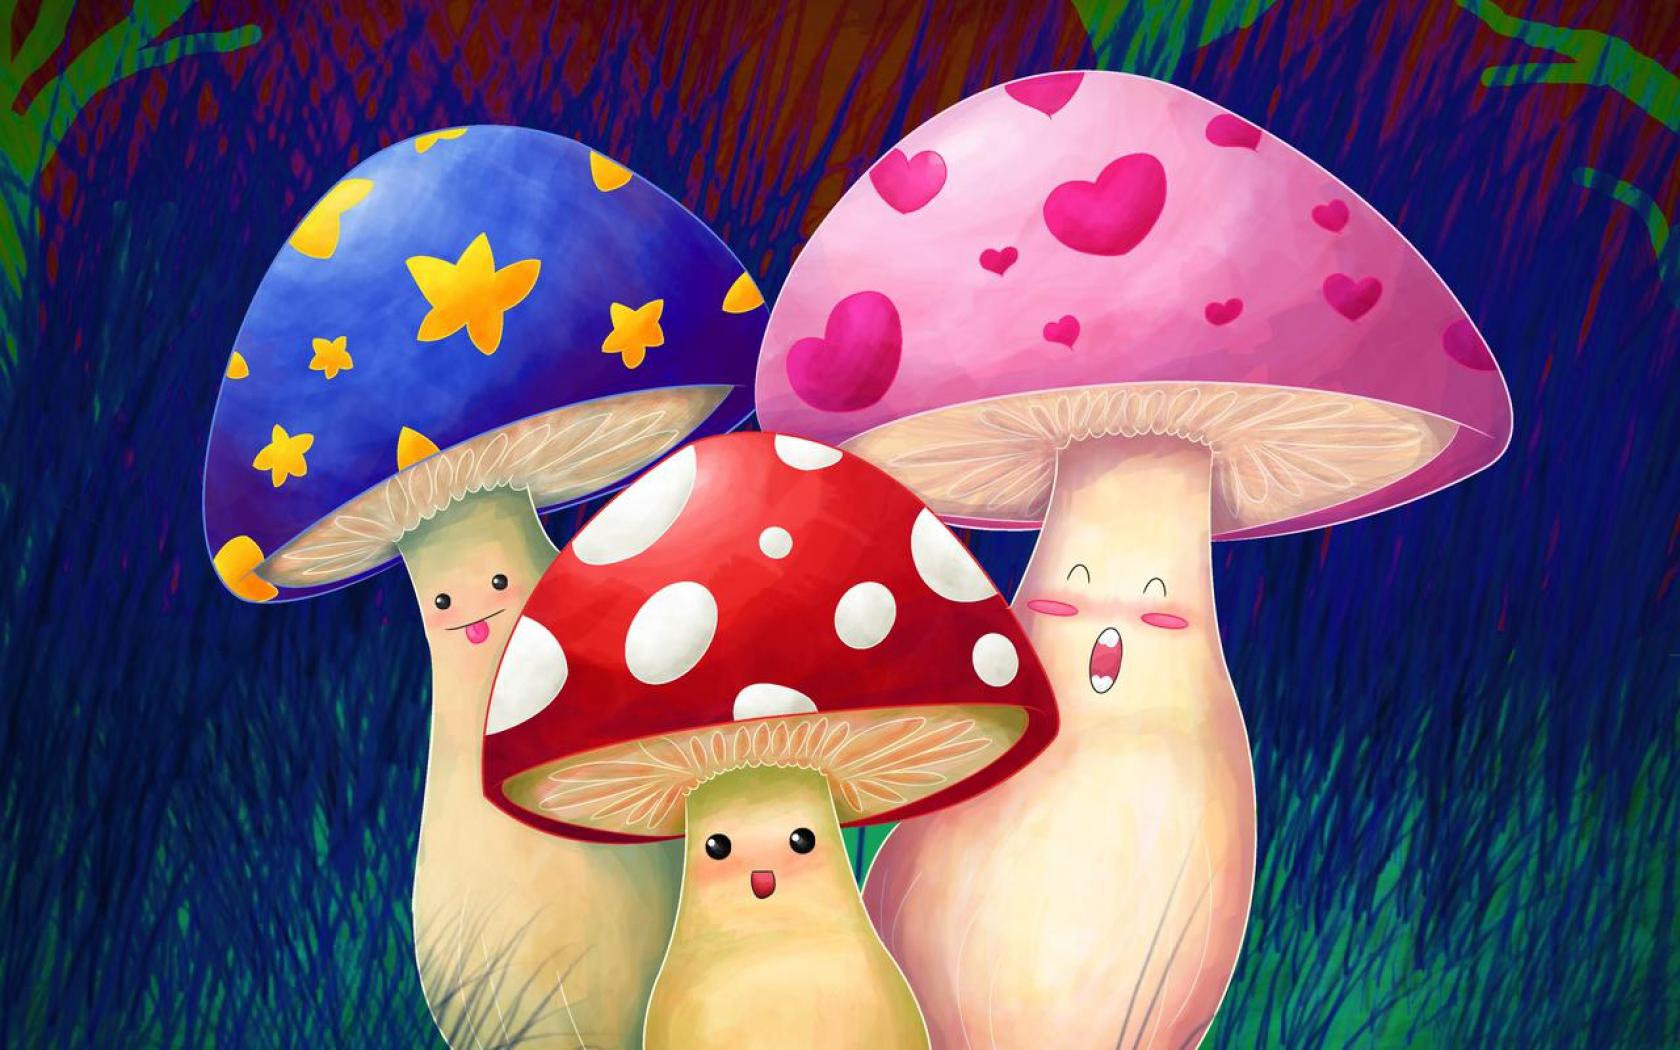 Download Cute Kawaii Mushroom in a Magical Forest Wallpaper | Wallpapers.com